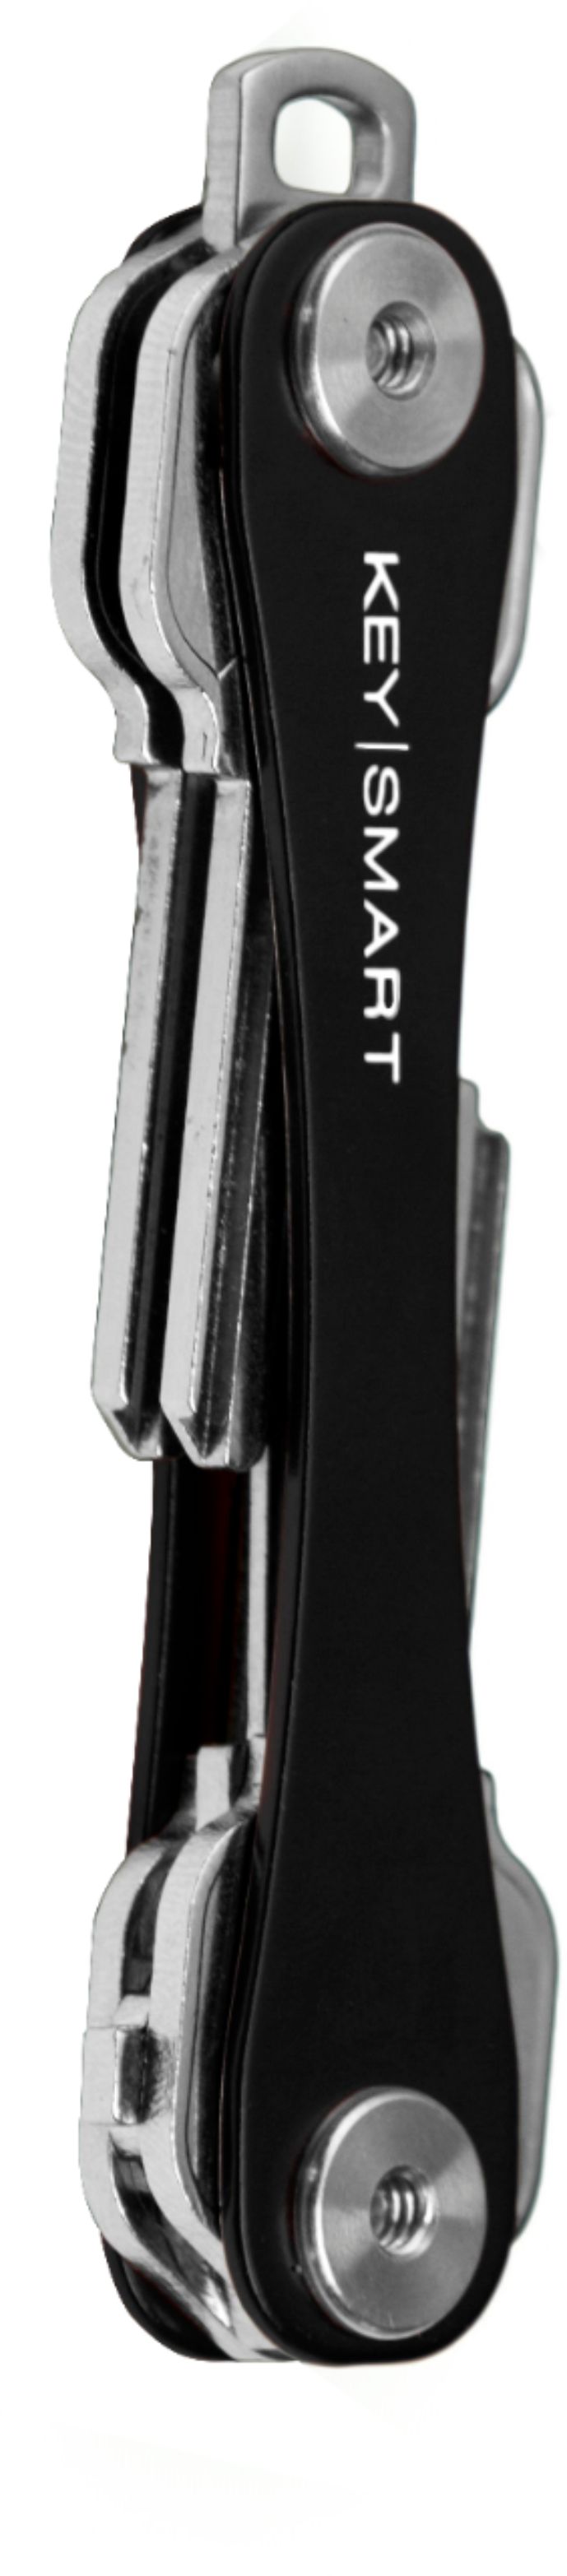 Key Smart 5018664 Pro Plastic Key Holder Black